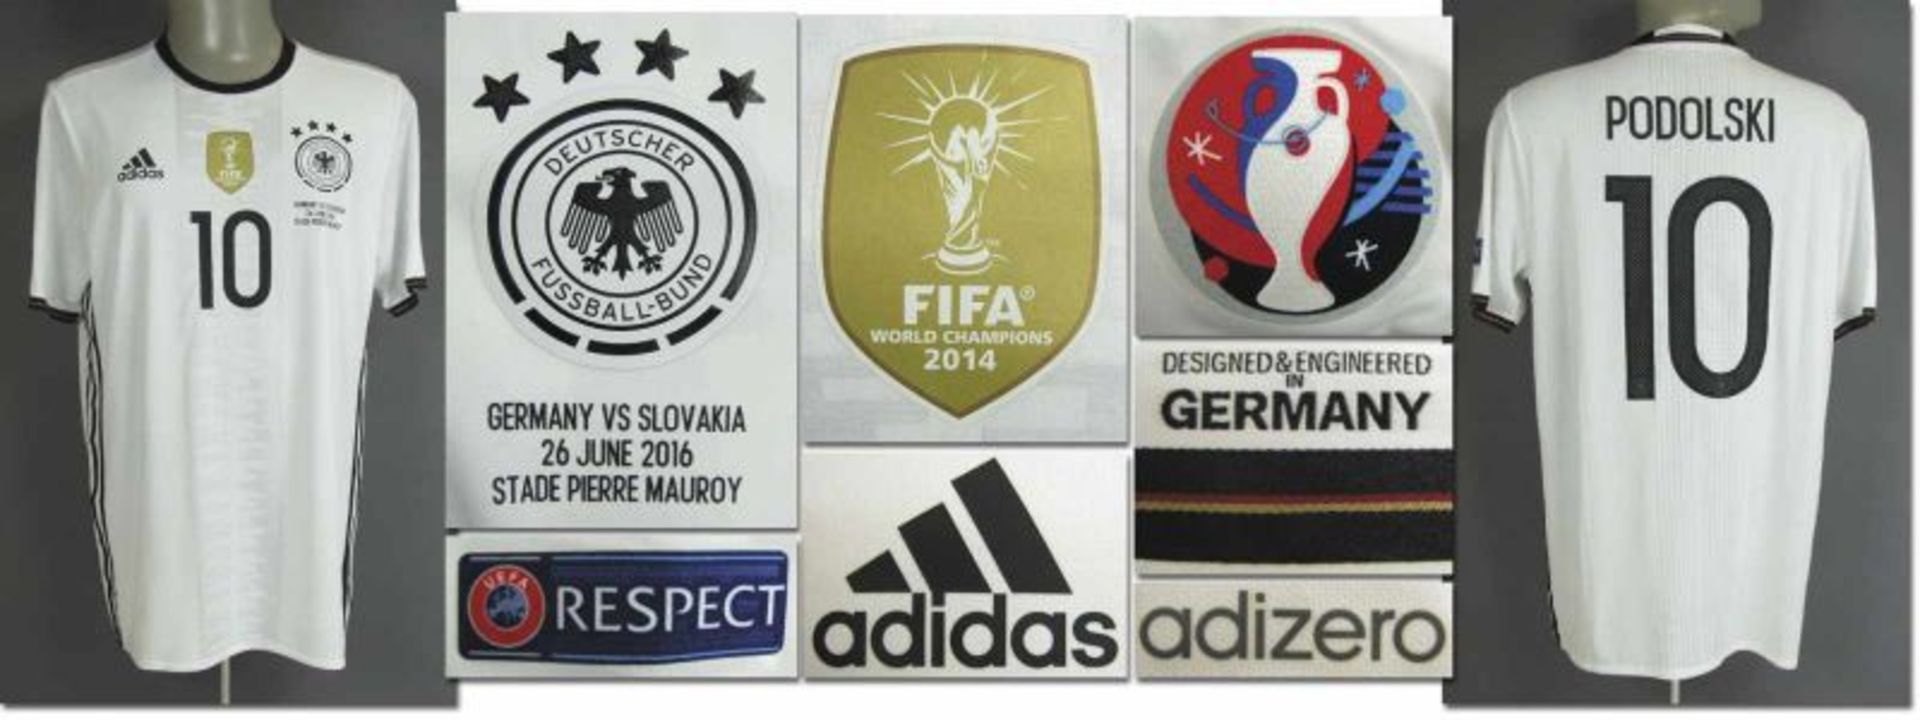 UEFA EURO 2016 match worn football shirt Germany - Original match worn shirt Germany with number 10.